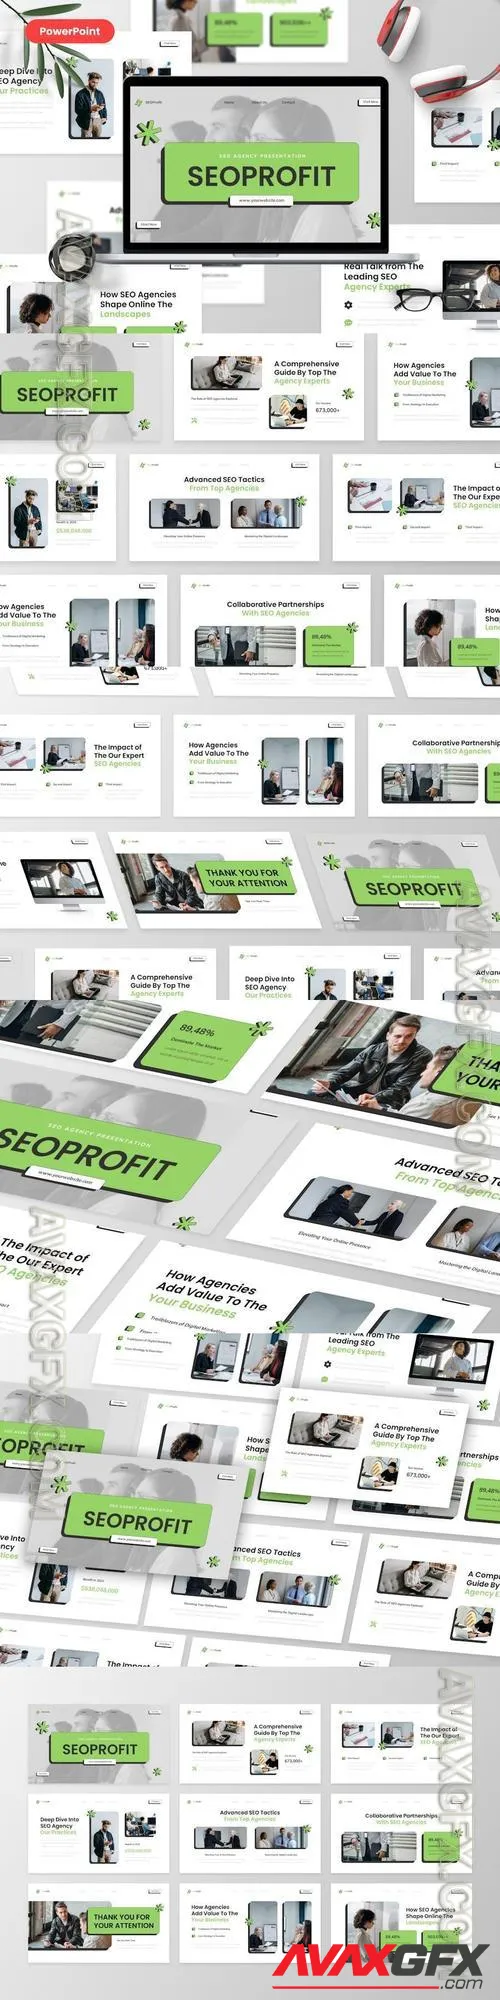 SEOProfit - SEO Agency PowerPoint Template